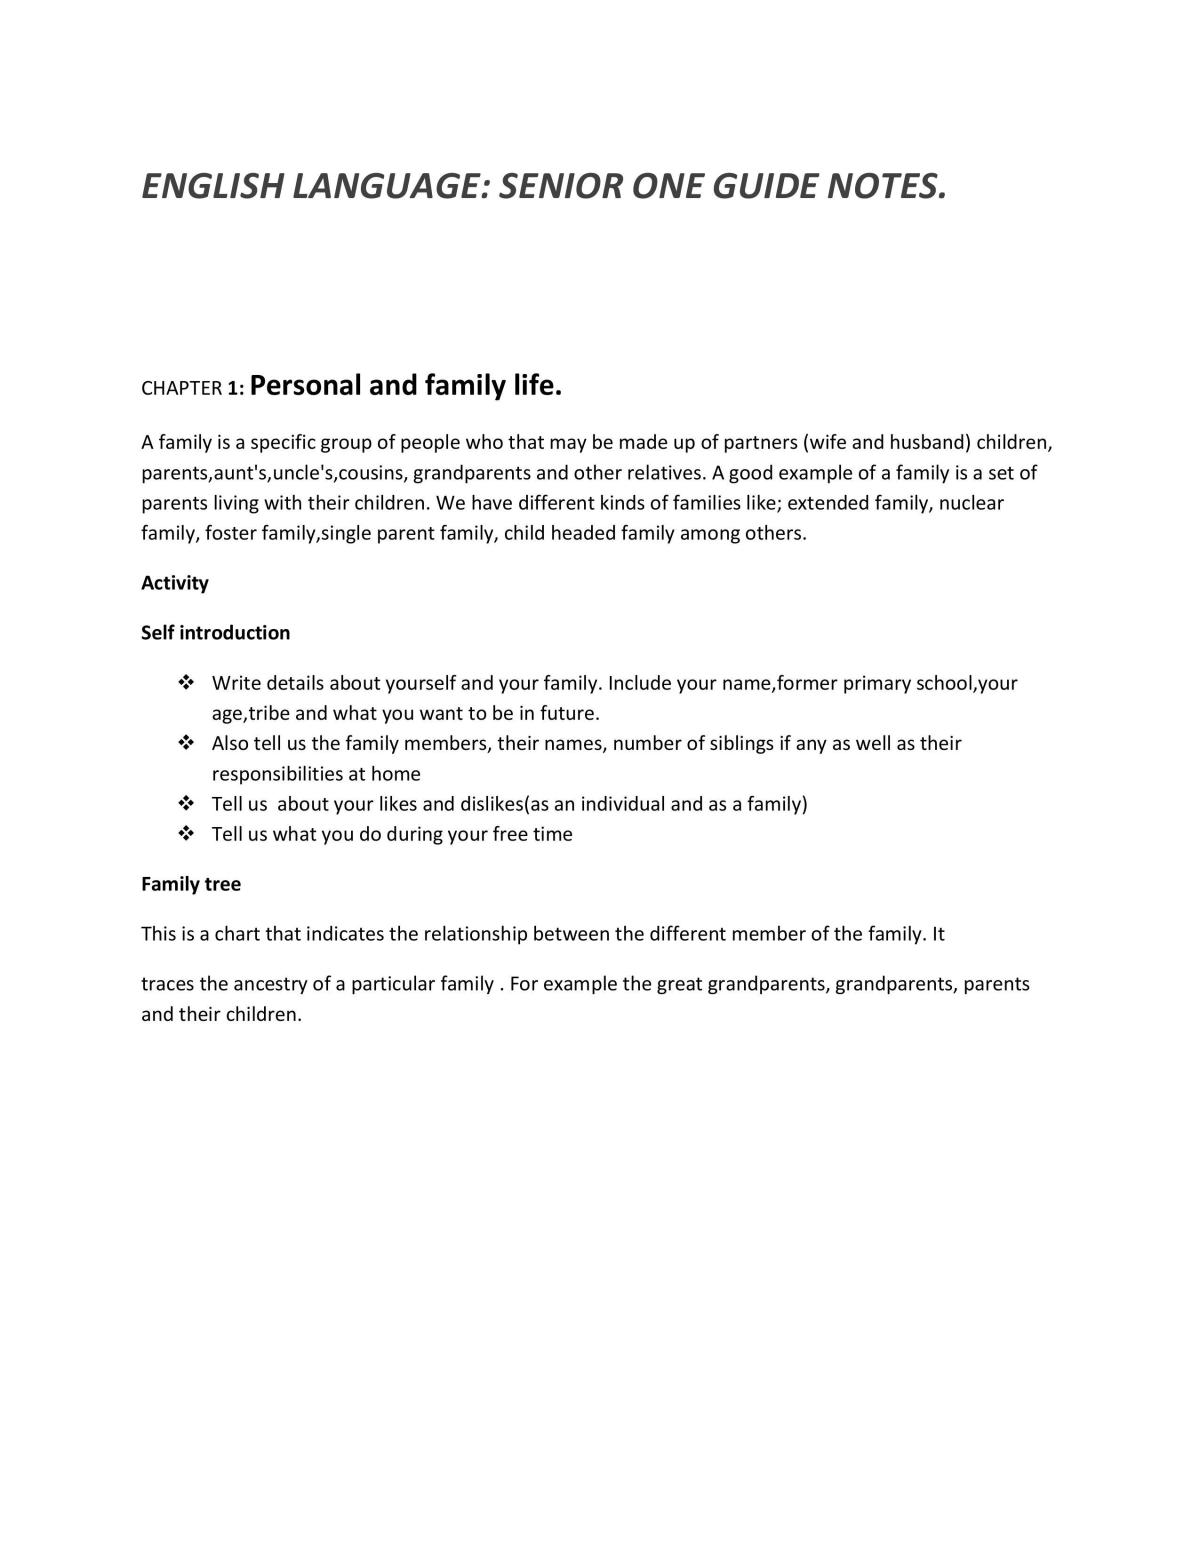 English language: senior one guide notes - Page 1